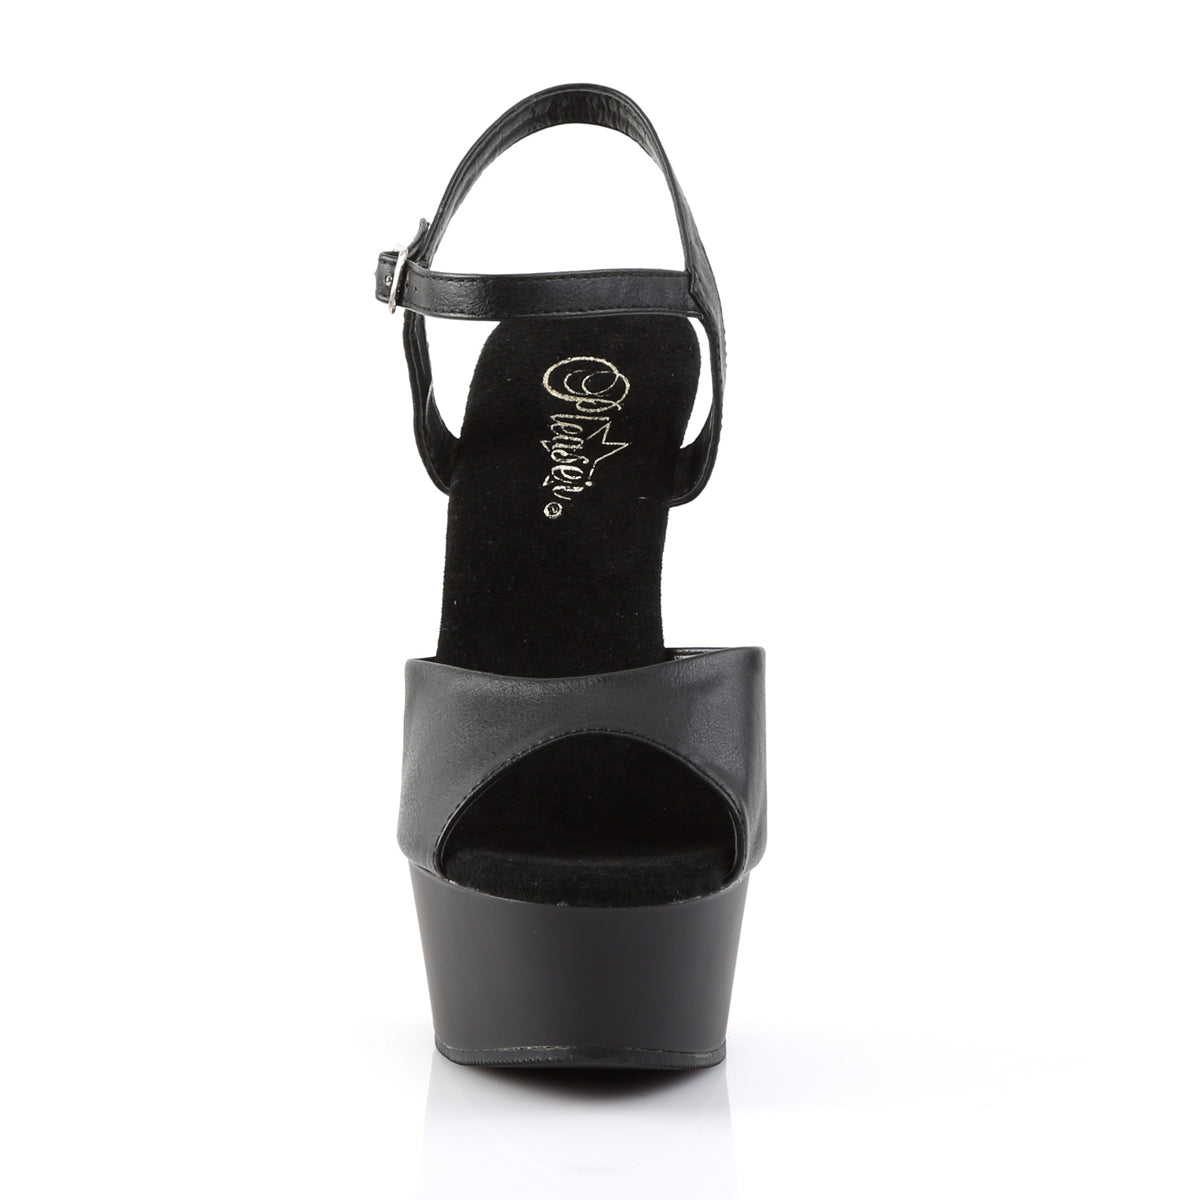 DELIGHT-609 Pleaser 6 Inch Heel Black Pole Dancing Platform-Pleaser- Sexy Shoes Alternative Footwear